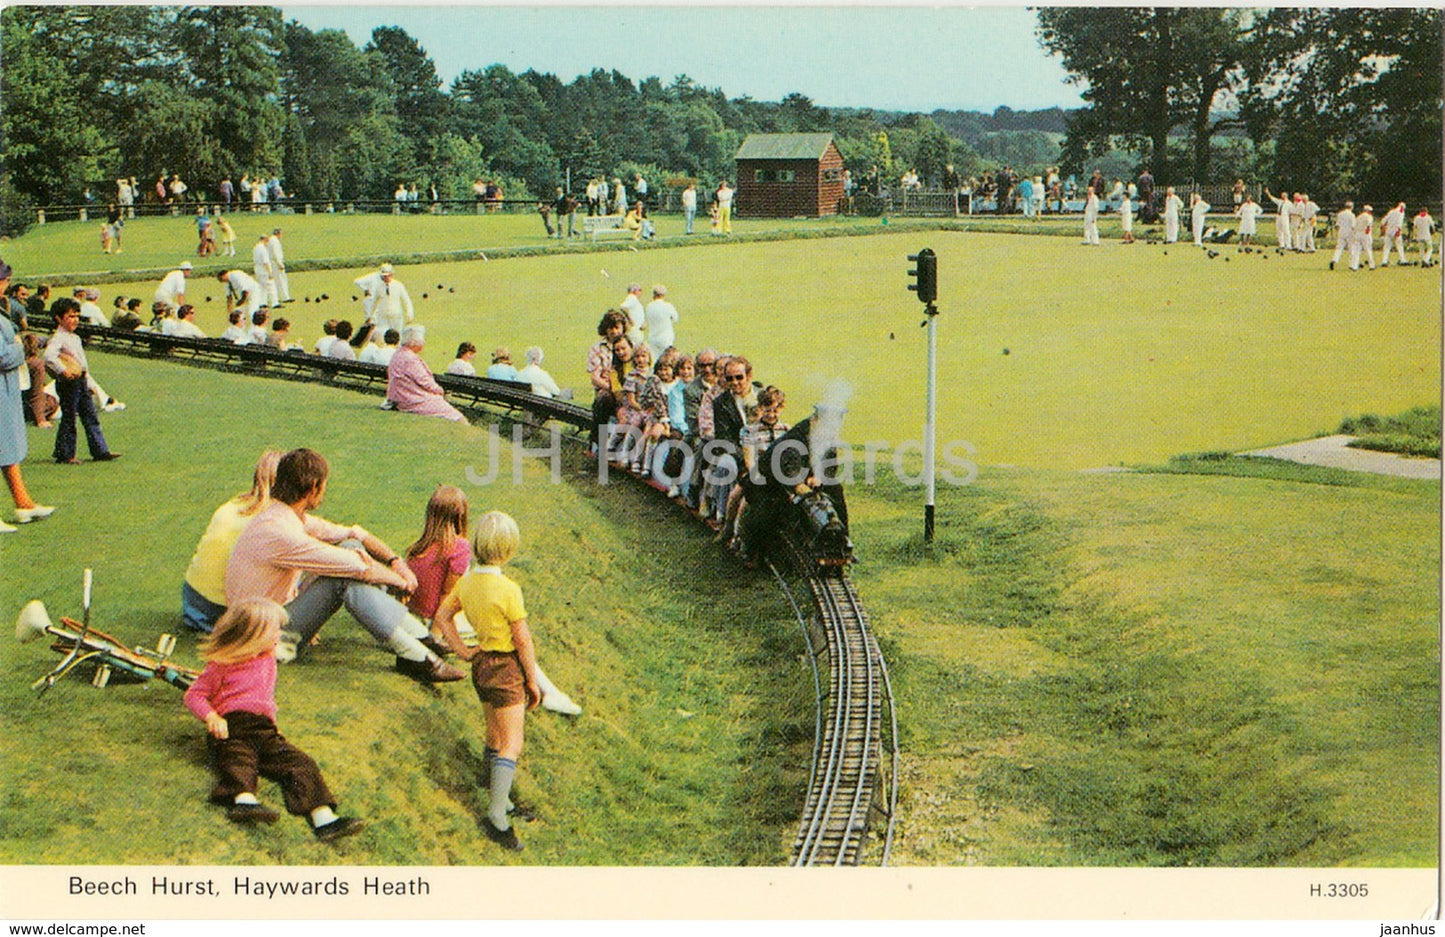 Haywards Heath - Beech Hurst - mini train - H.3305 - United Kingdom - England - used - JH Postcards